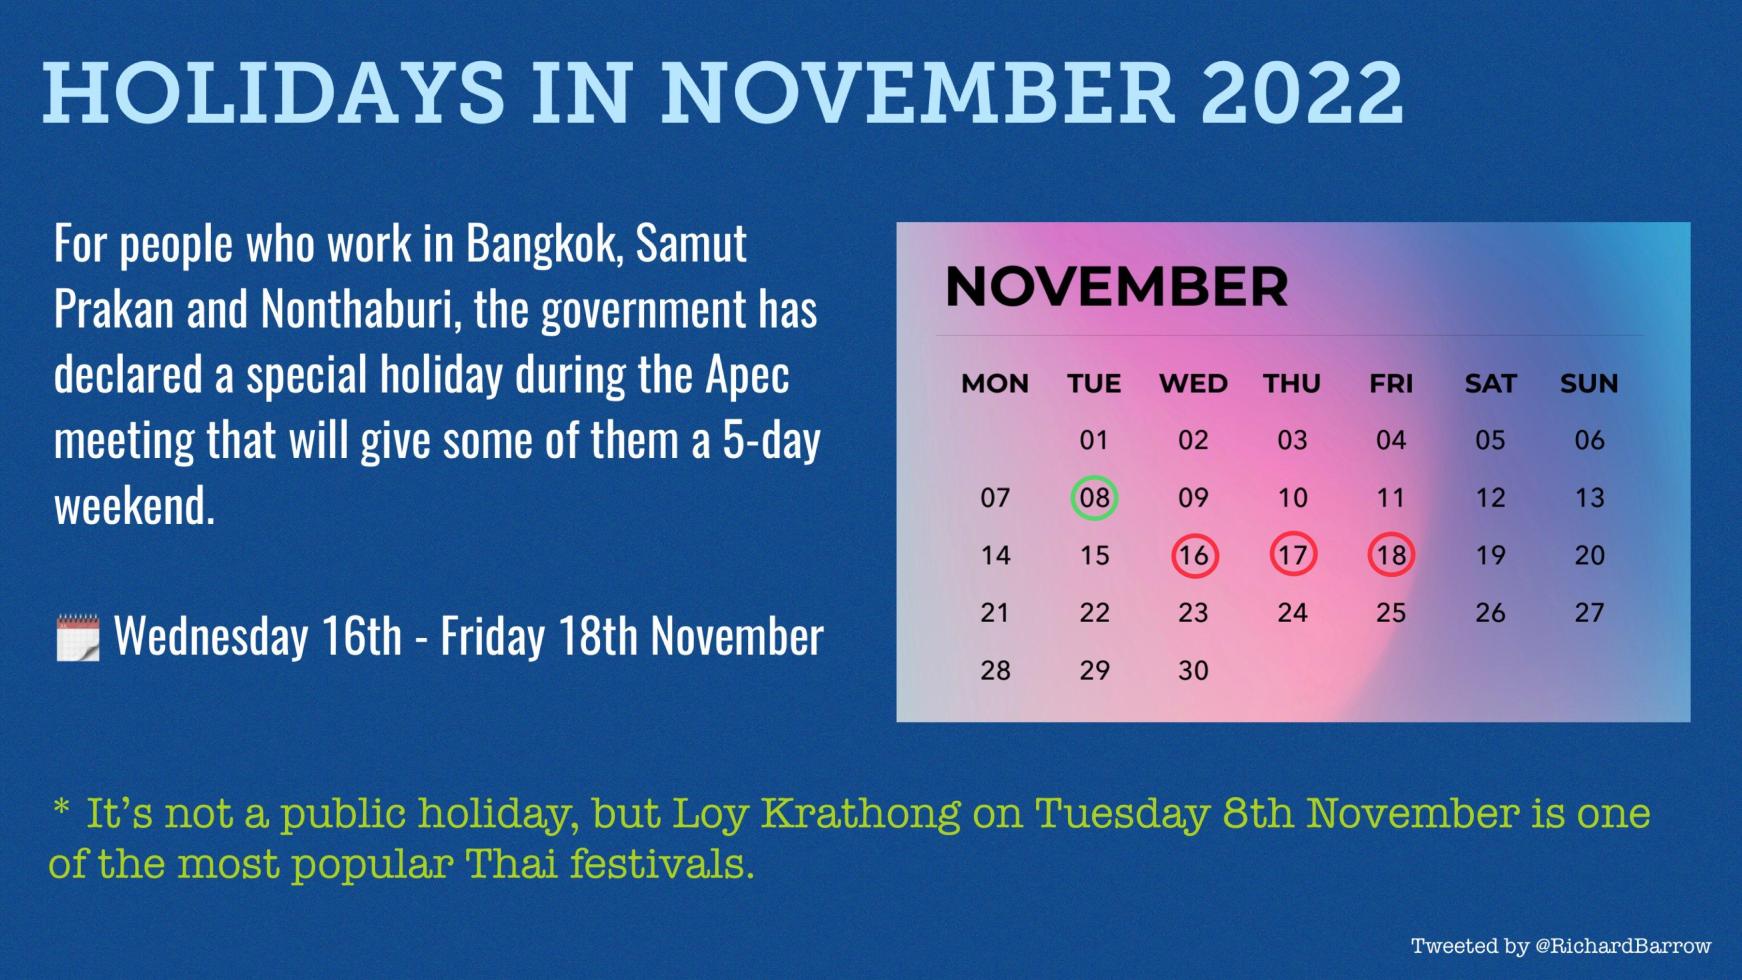 Additional Holidays for Bangkokians